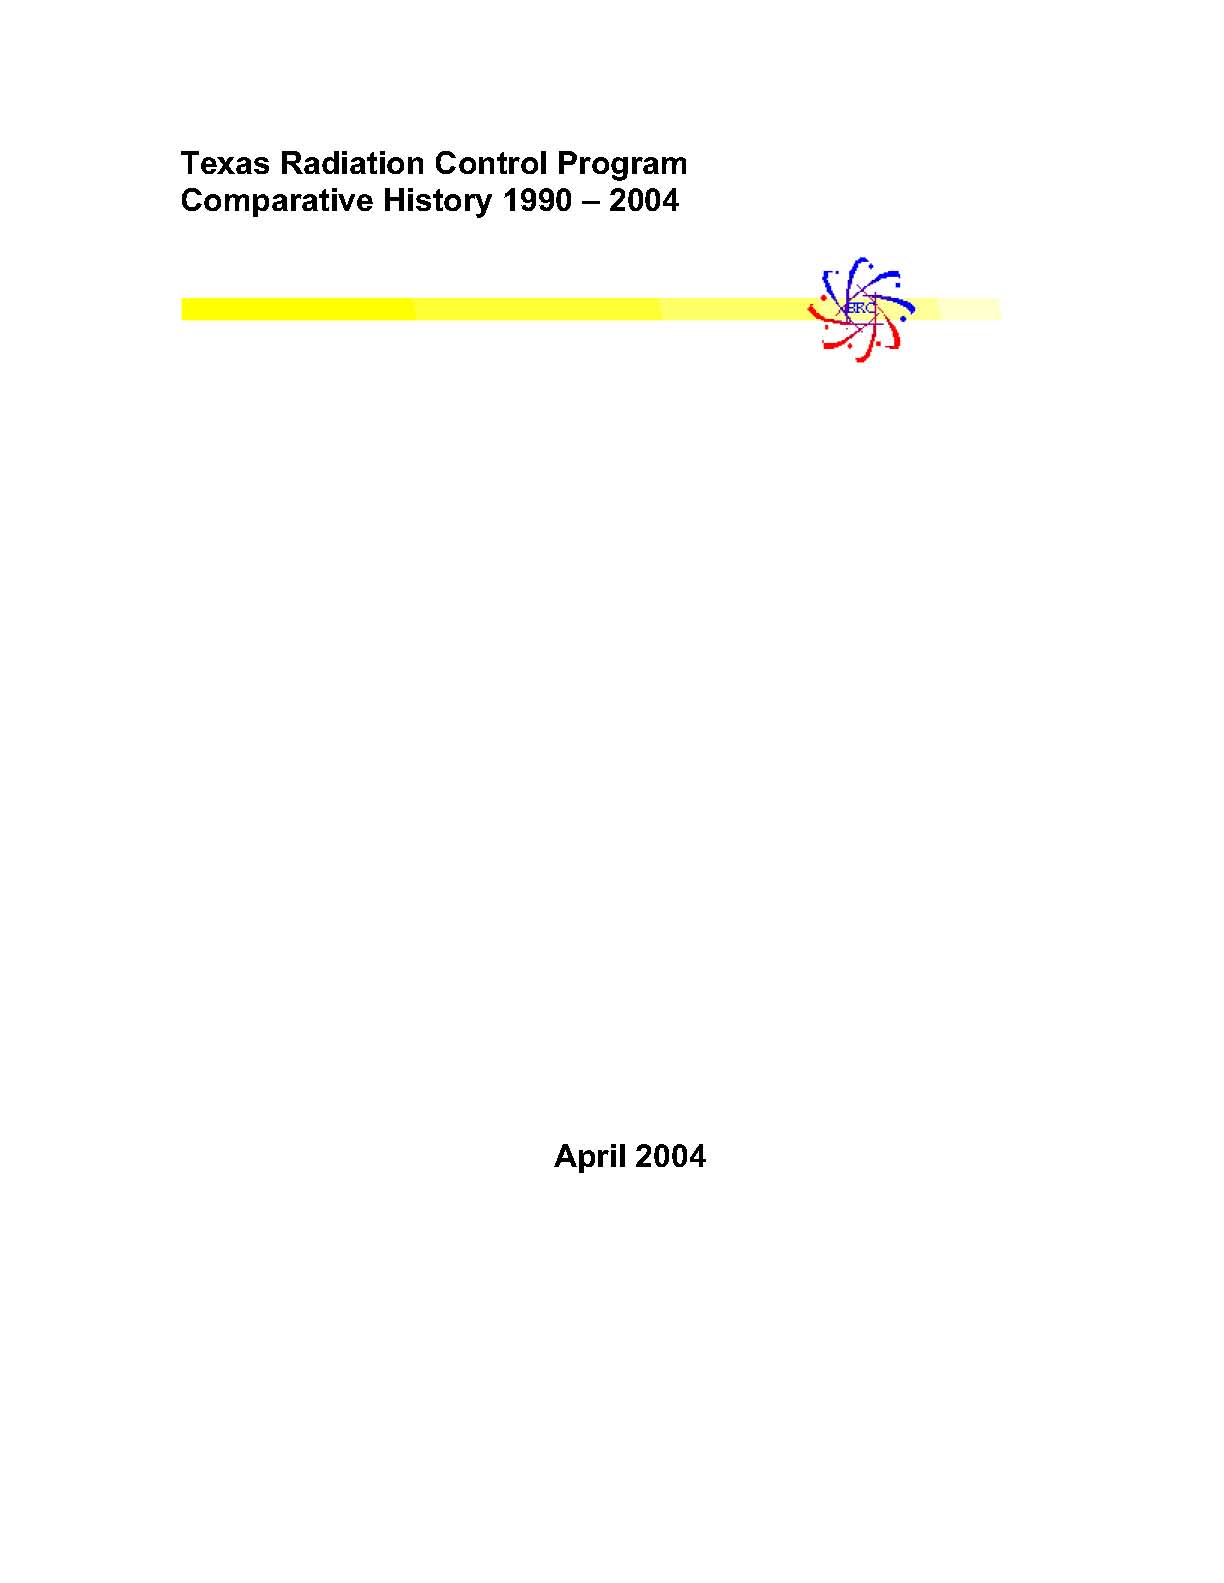 Cover picture of the Final BRC Comparison 1990-2004